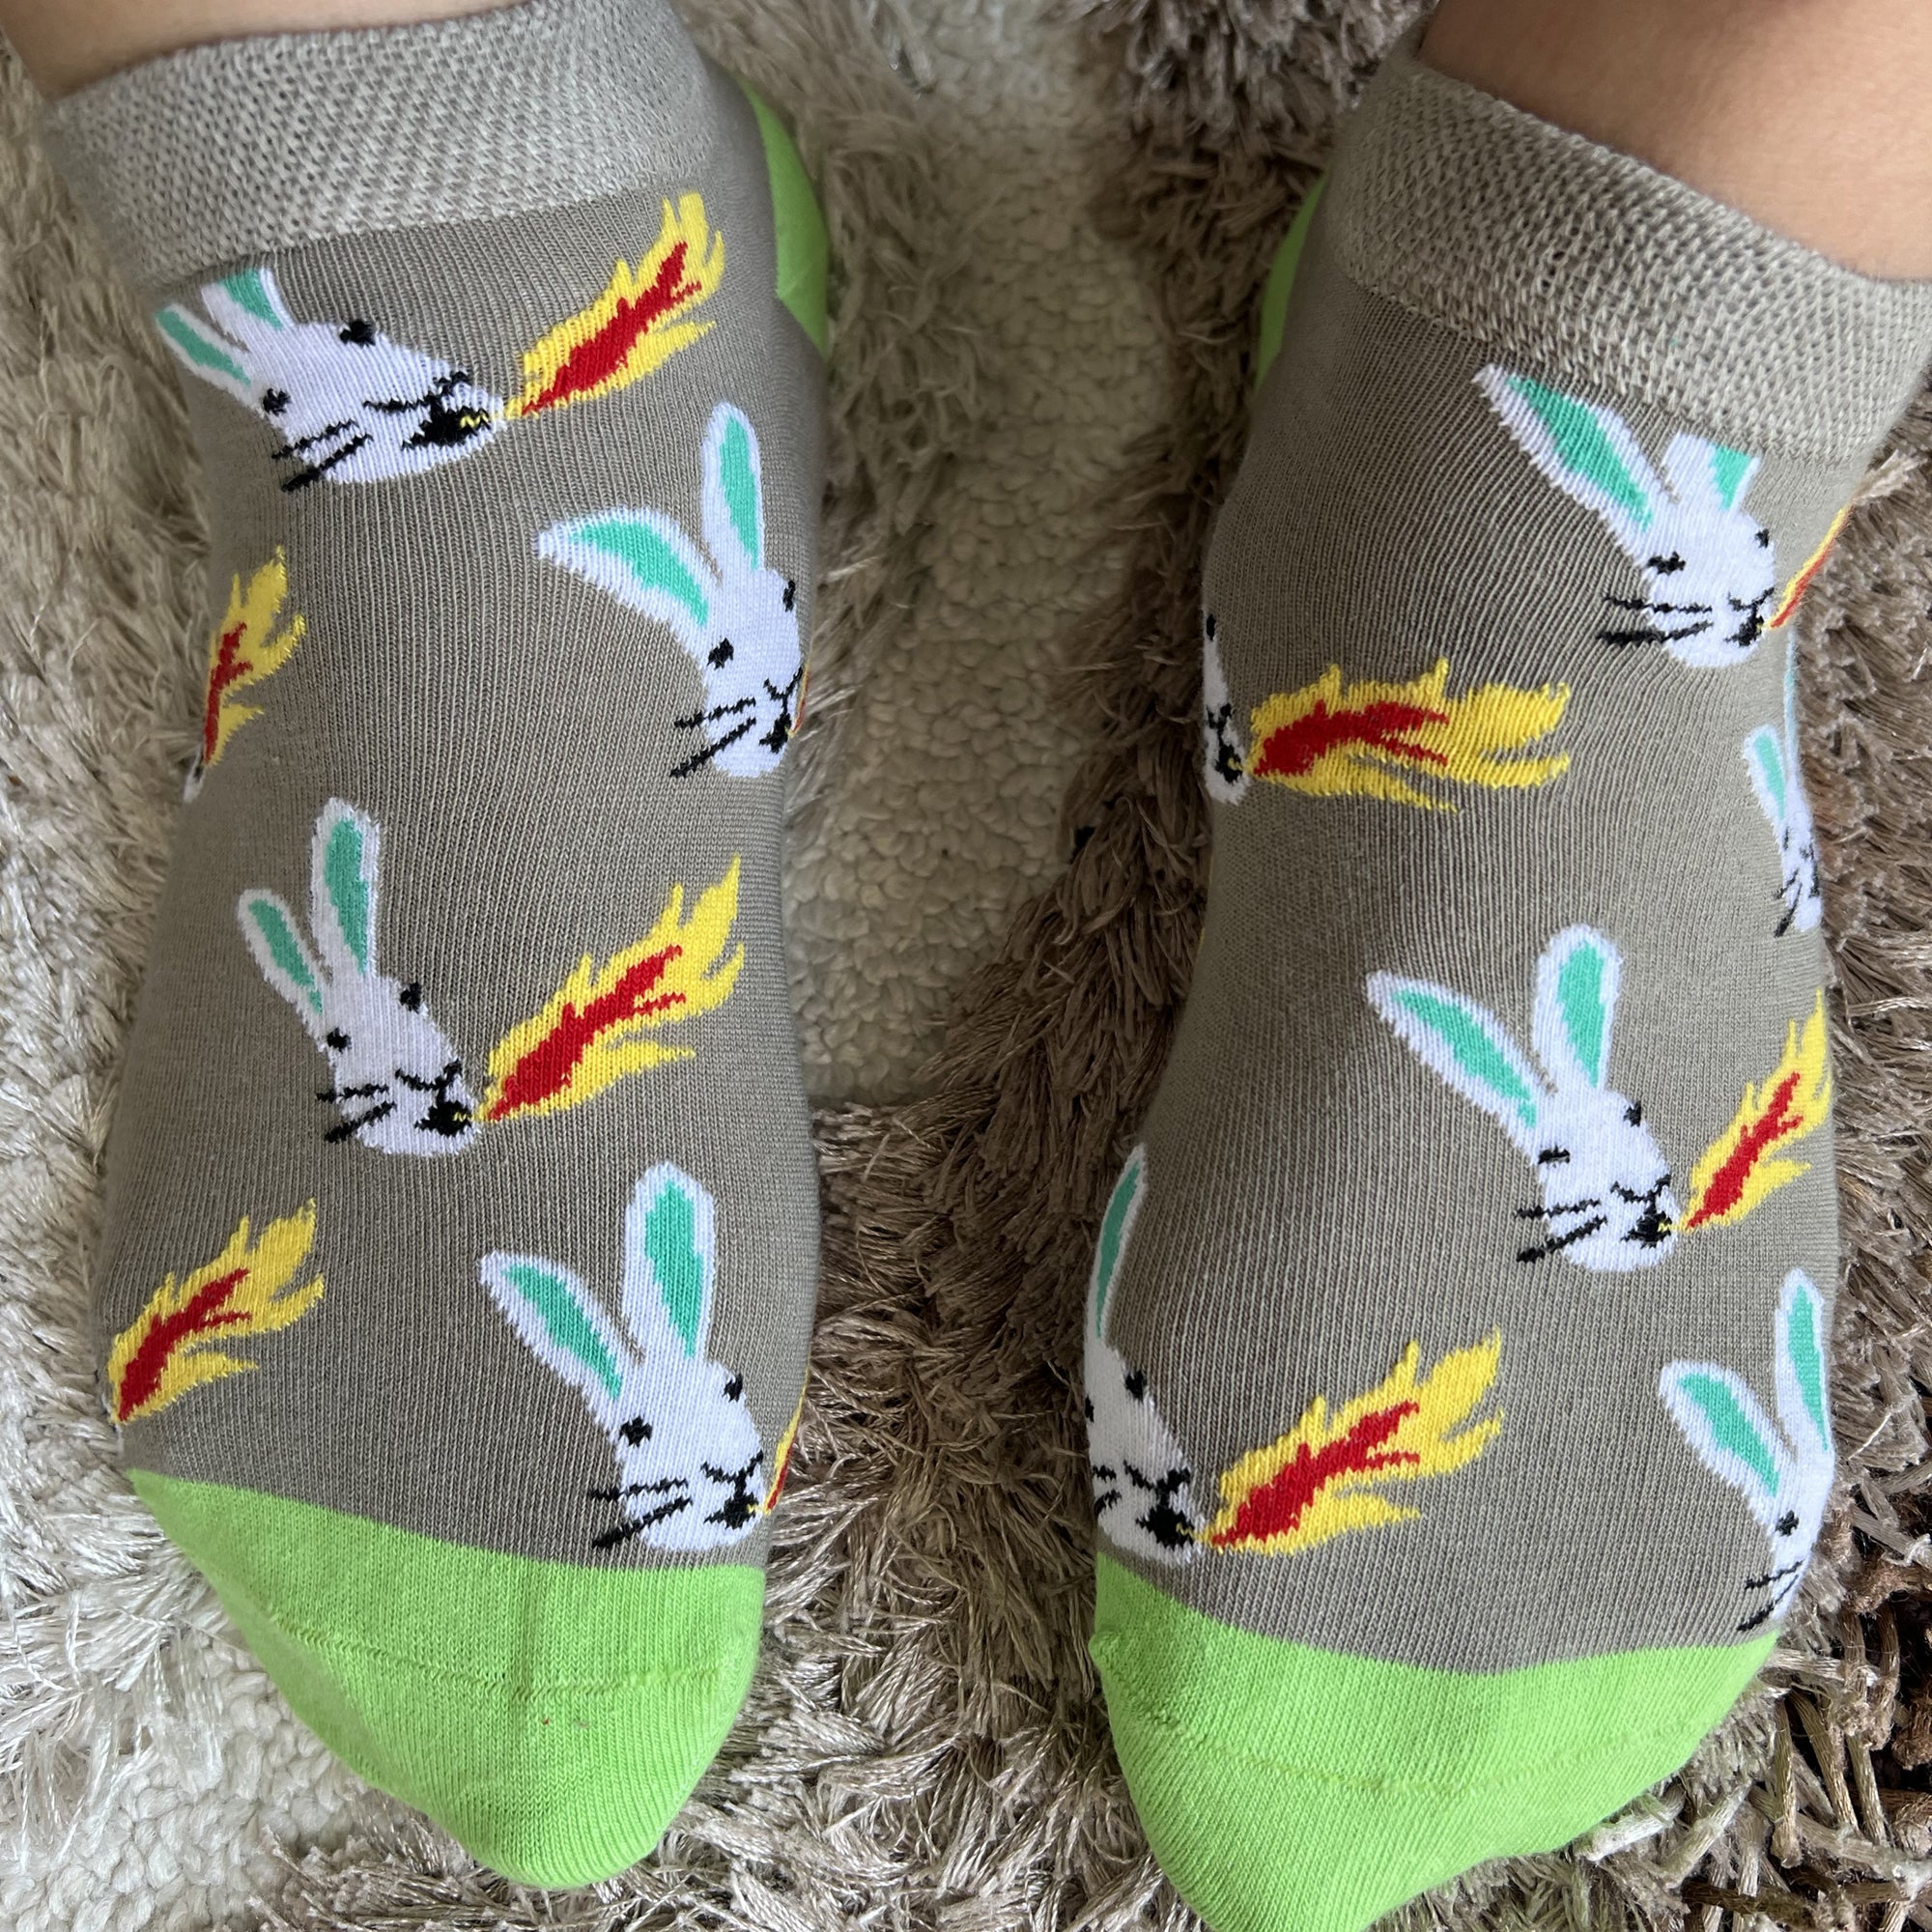 Louluu Rabbit Low Cut Socks